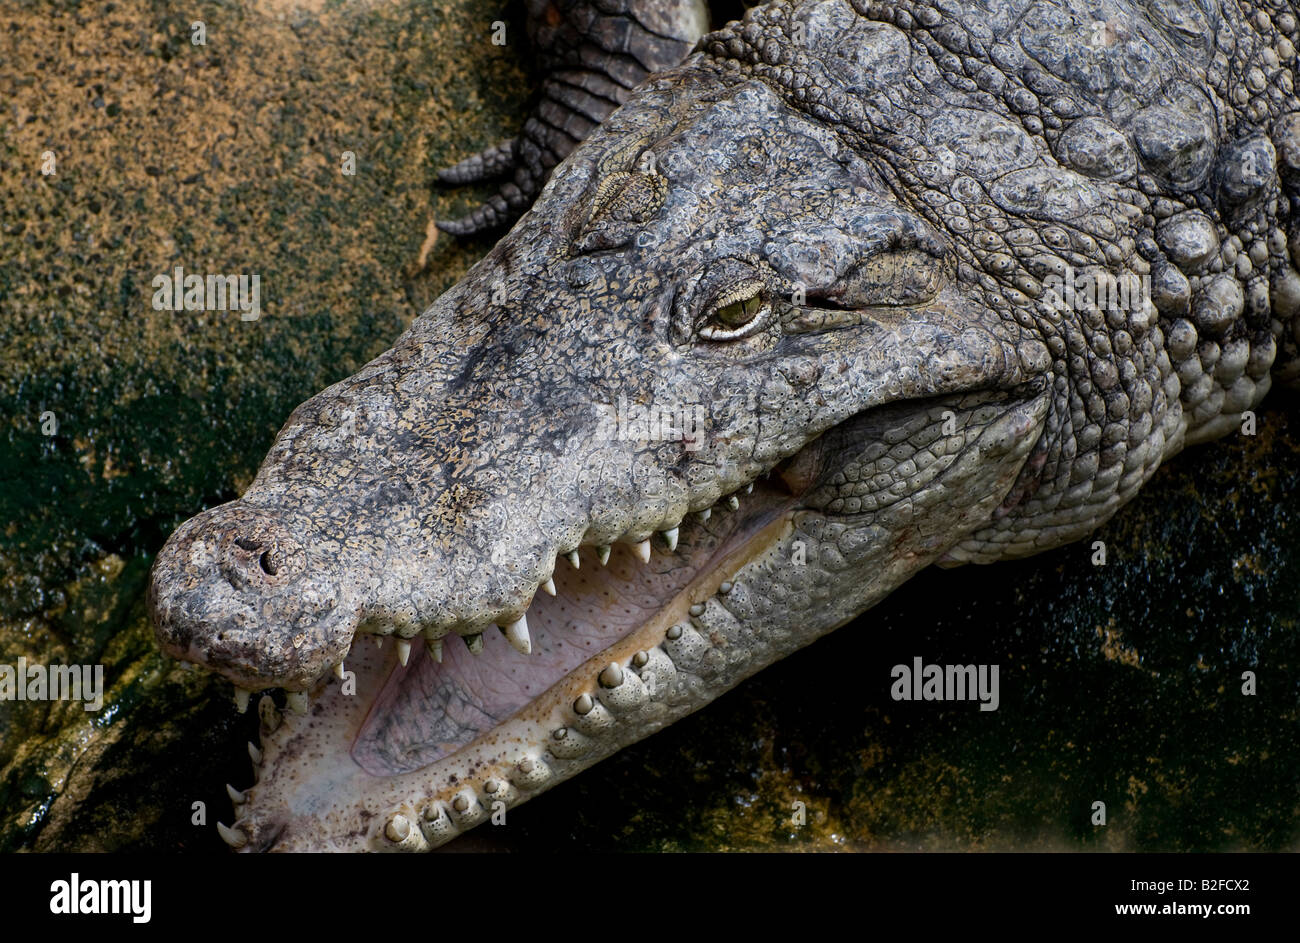 captive american alligator Stock Photo